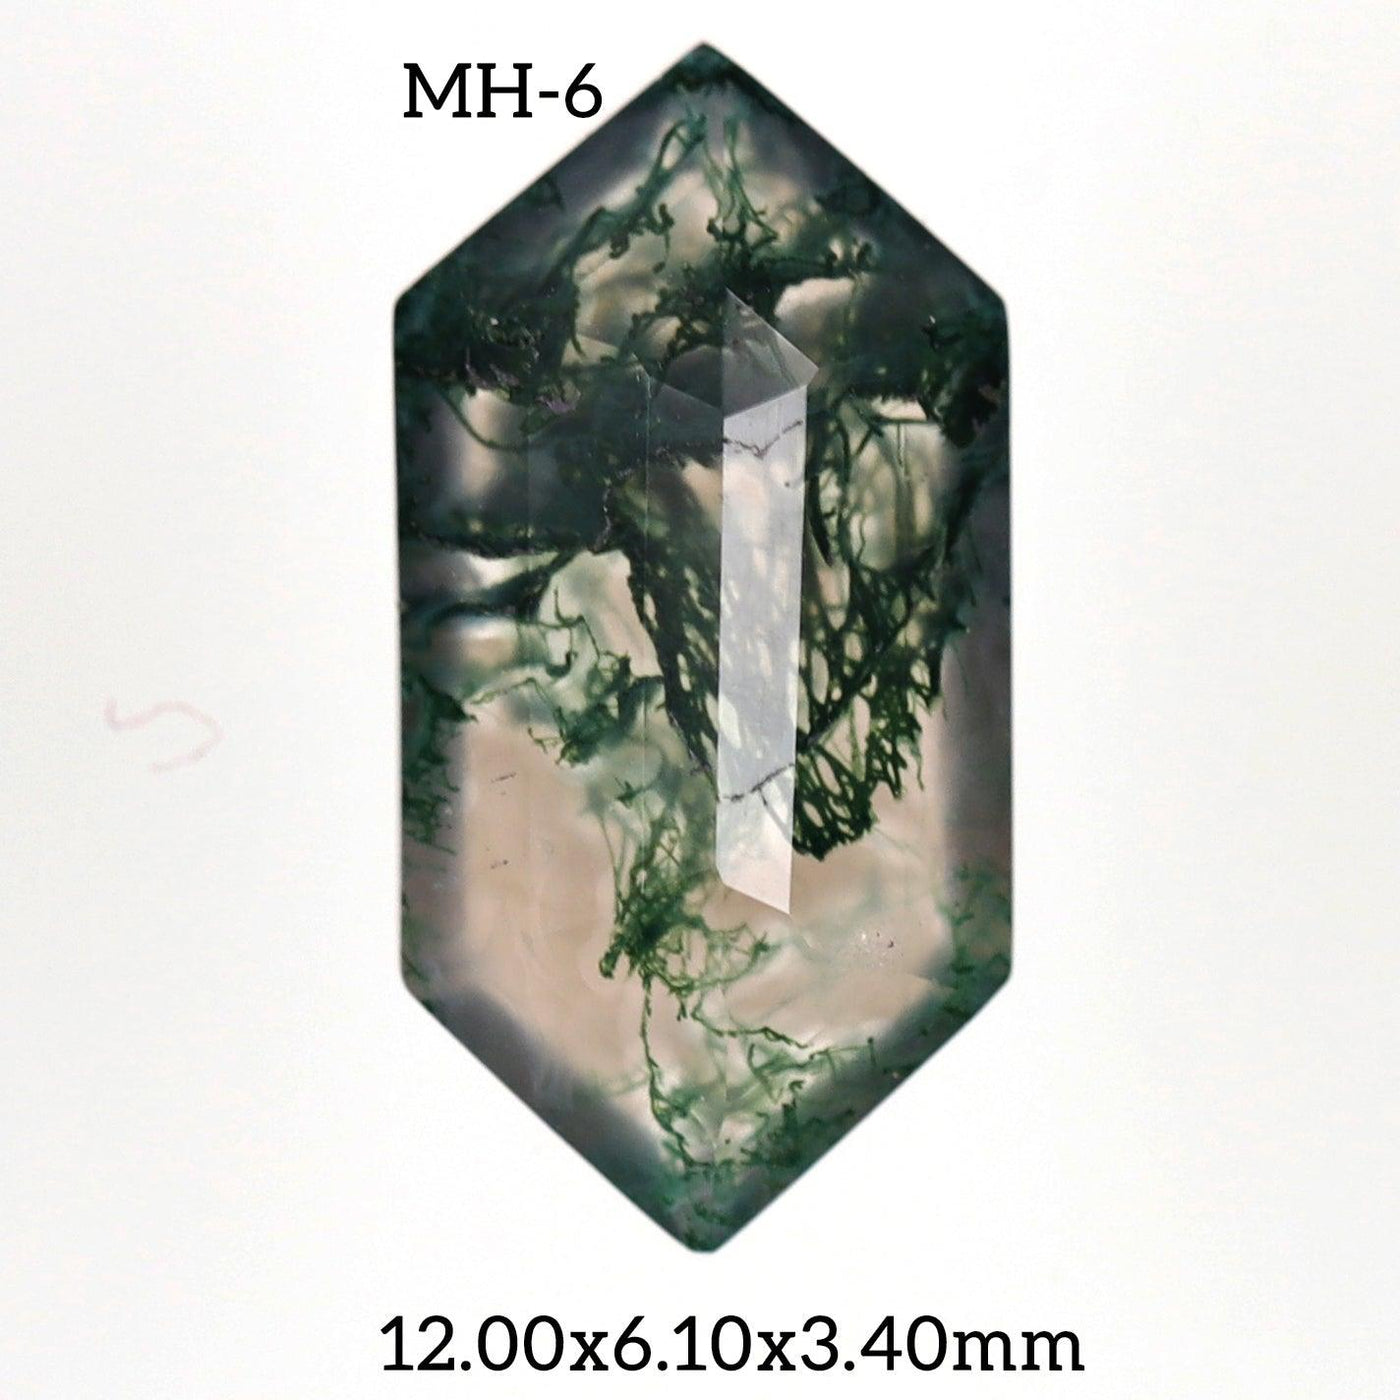 MH - 6 Moss Agate Hexagon Gemstone - Rubysta